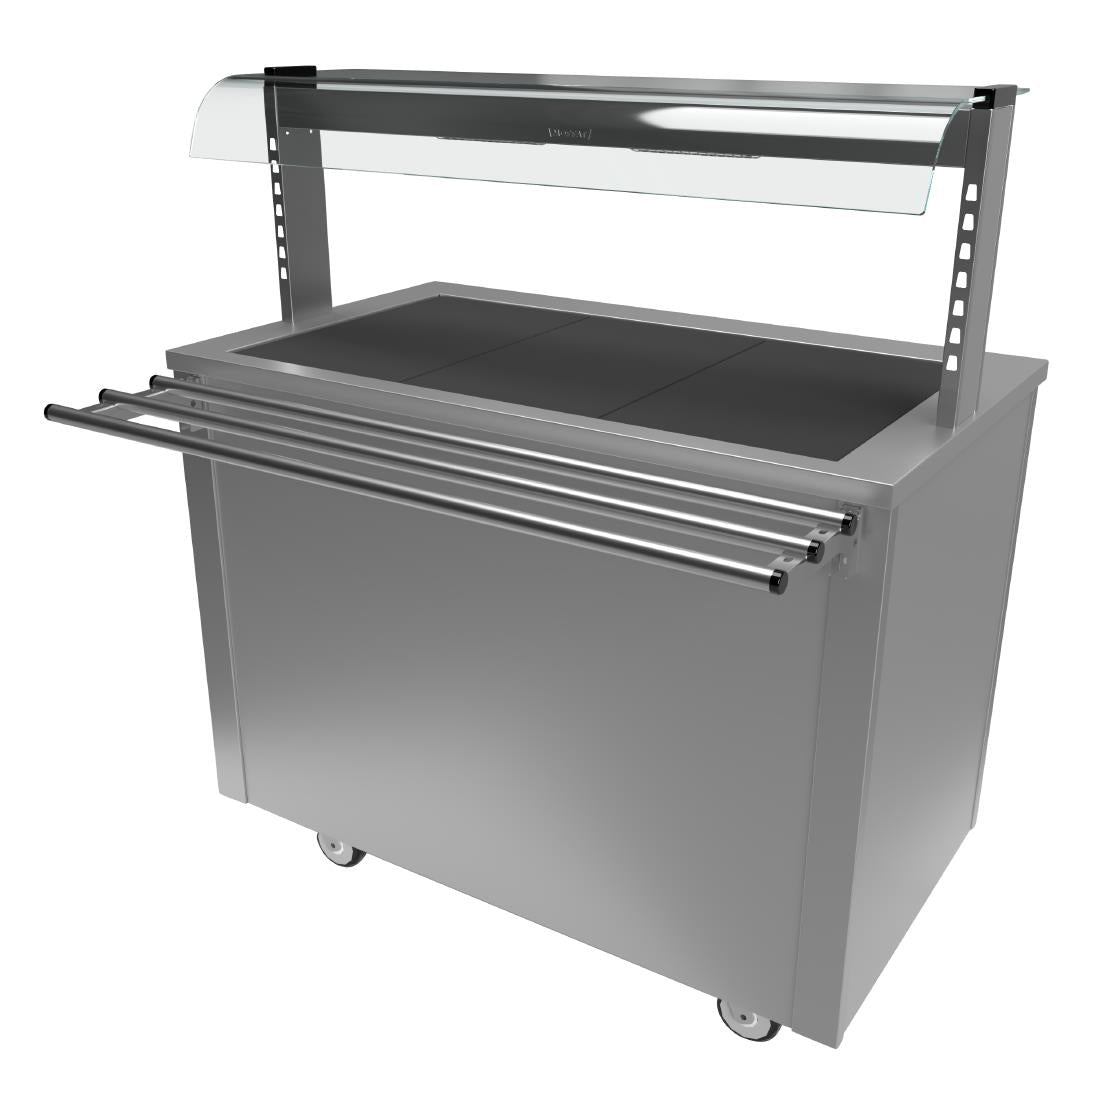 DR406 Moffat Versicarte Plus Hot Food Service Counter VCHT3 JD Catering Equipment Solutions Ltd